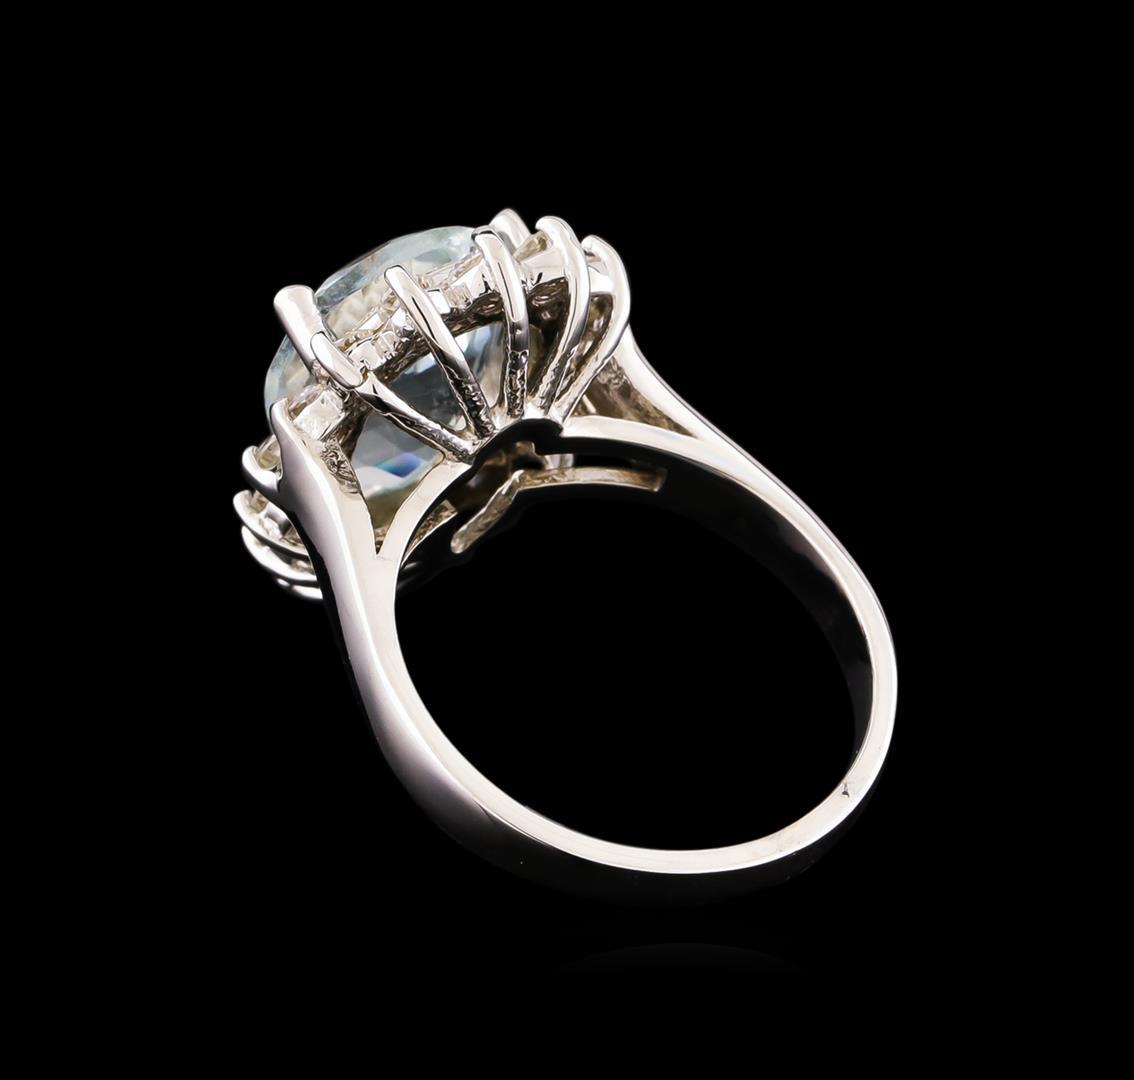 4.48 ctw Aquamarine and Diamond Ring - 14KT White Gold